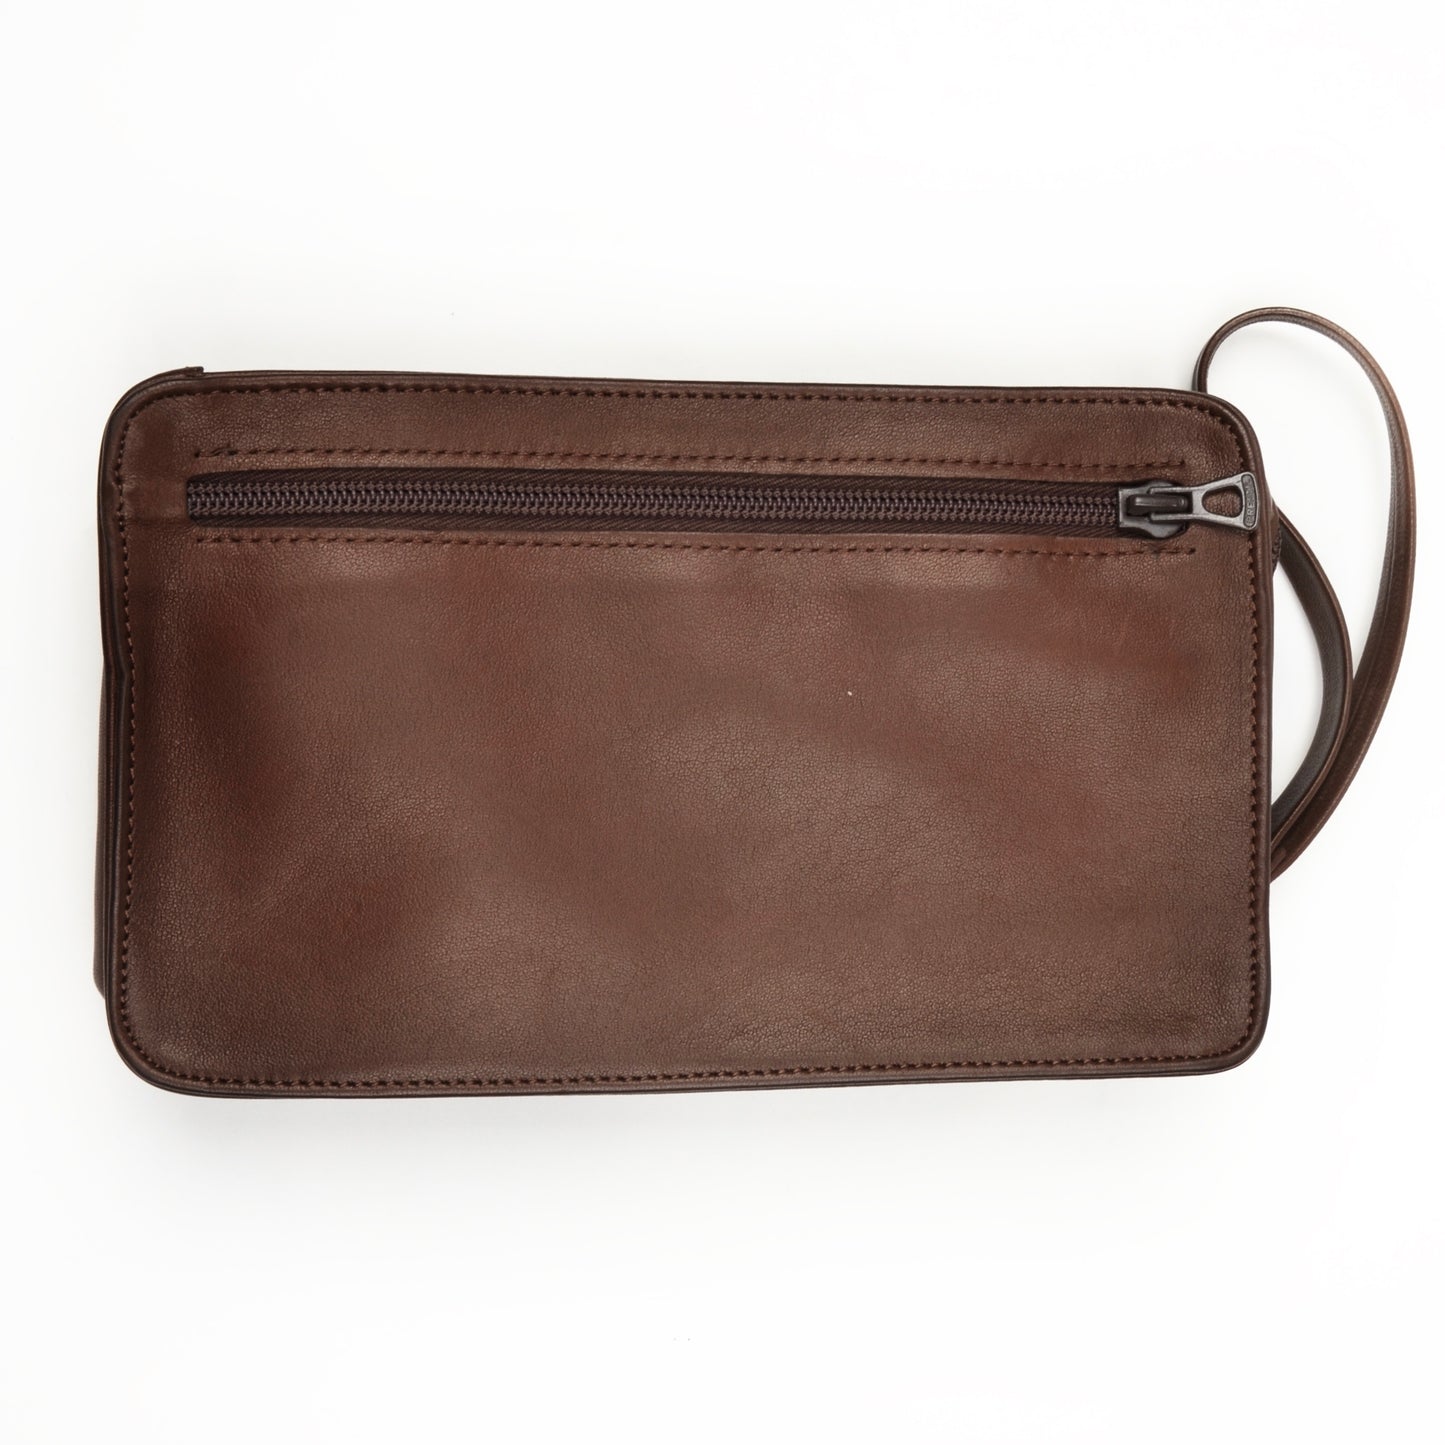 Longchamp Paris Small Travel Bag/Pouch - Brown